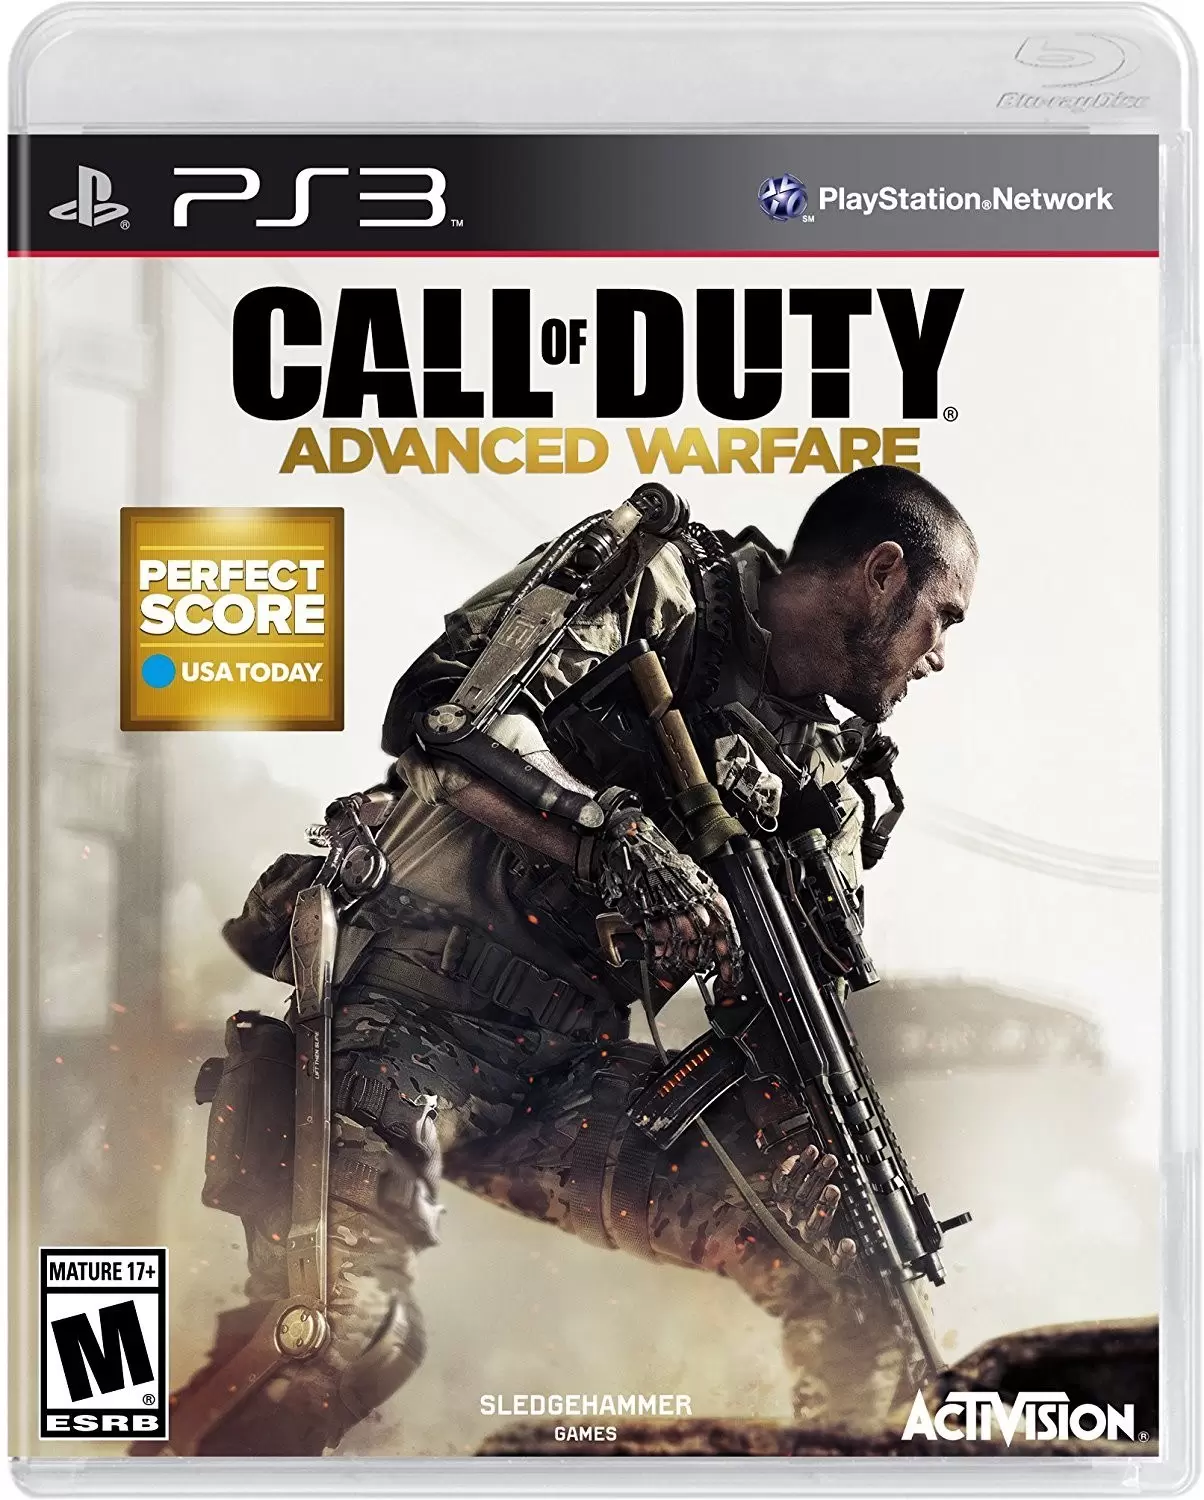 PS3 Games - Call of Duty: Advanced Warfare